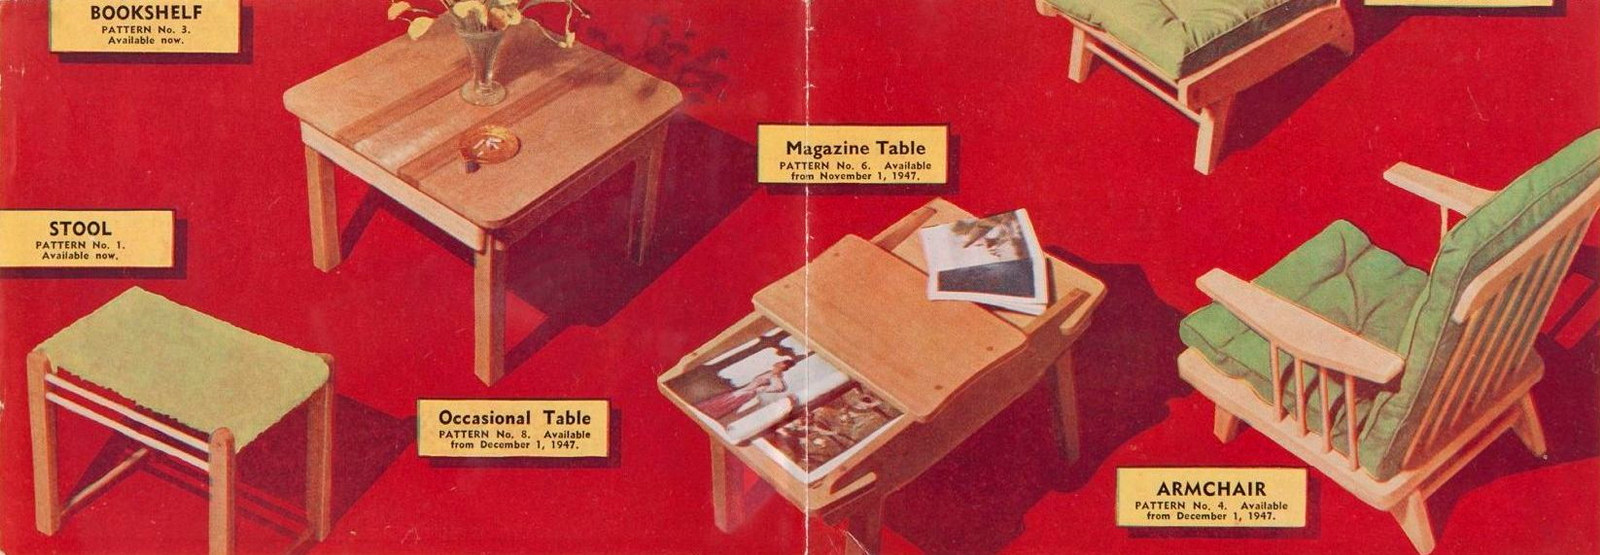 Promotional brochure for Patterncraft furniture patterns, 1947